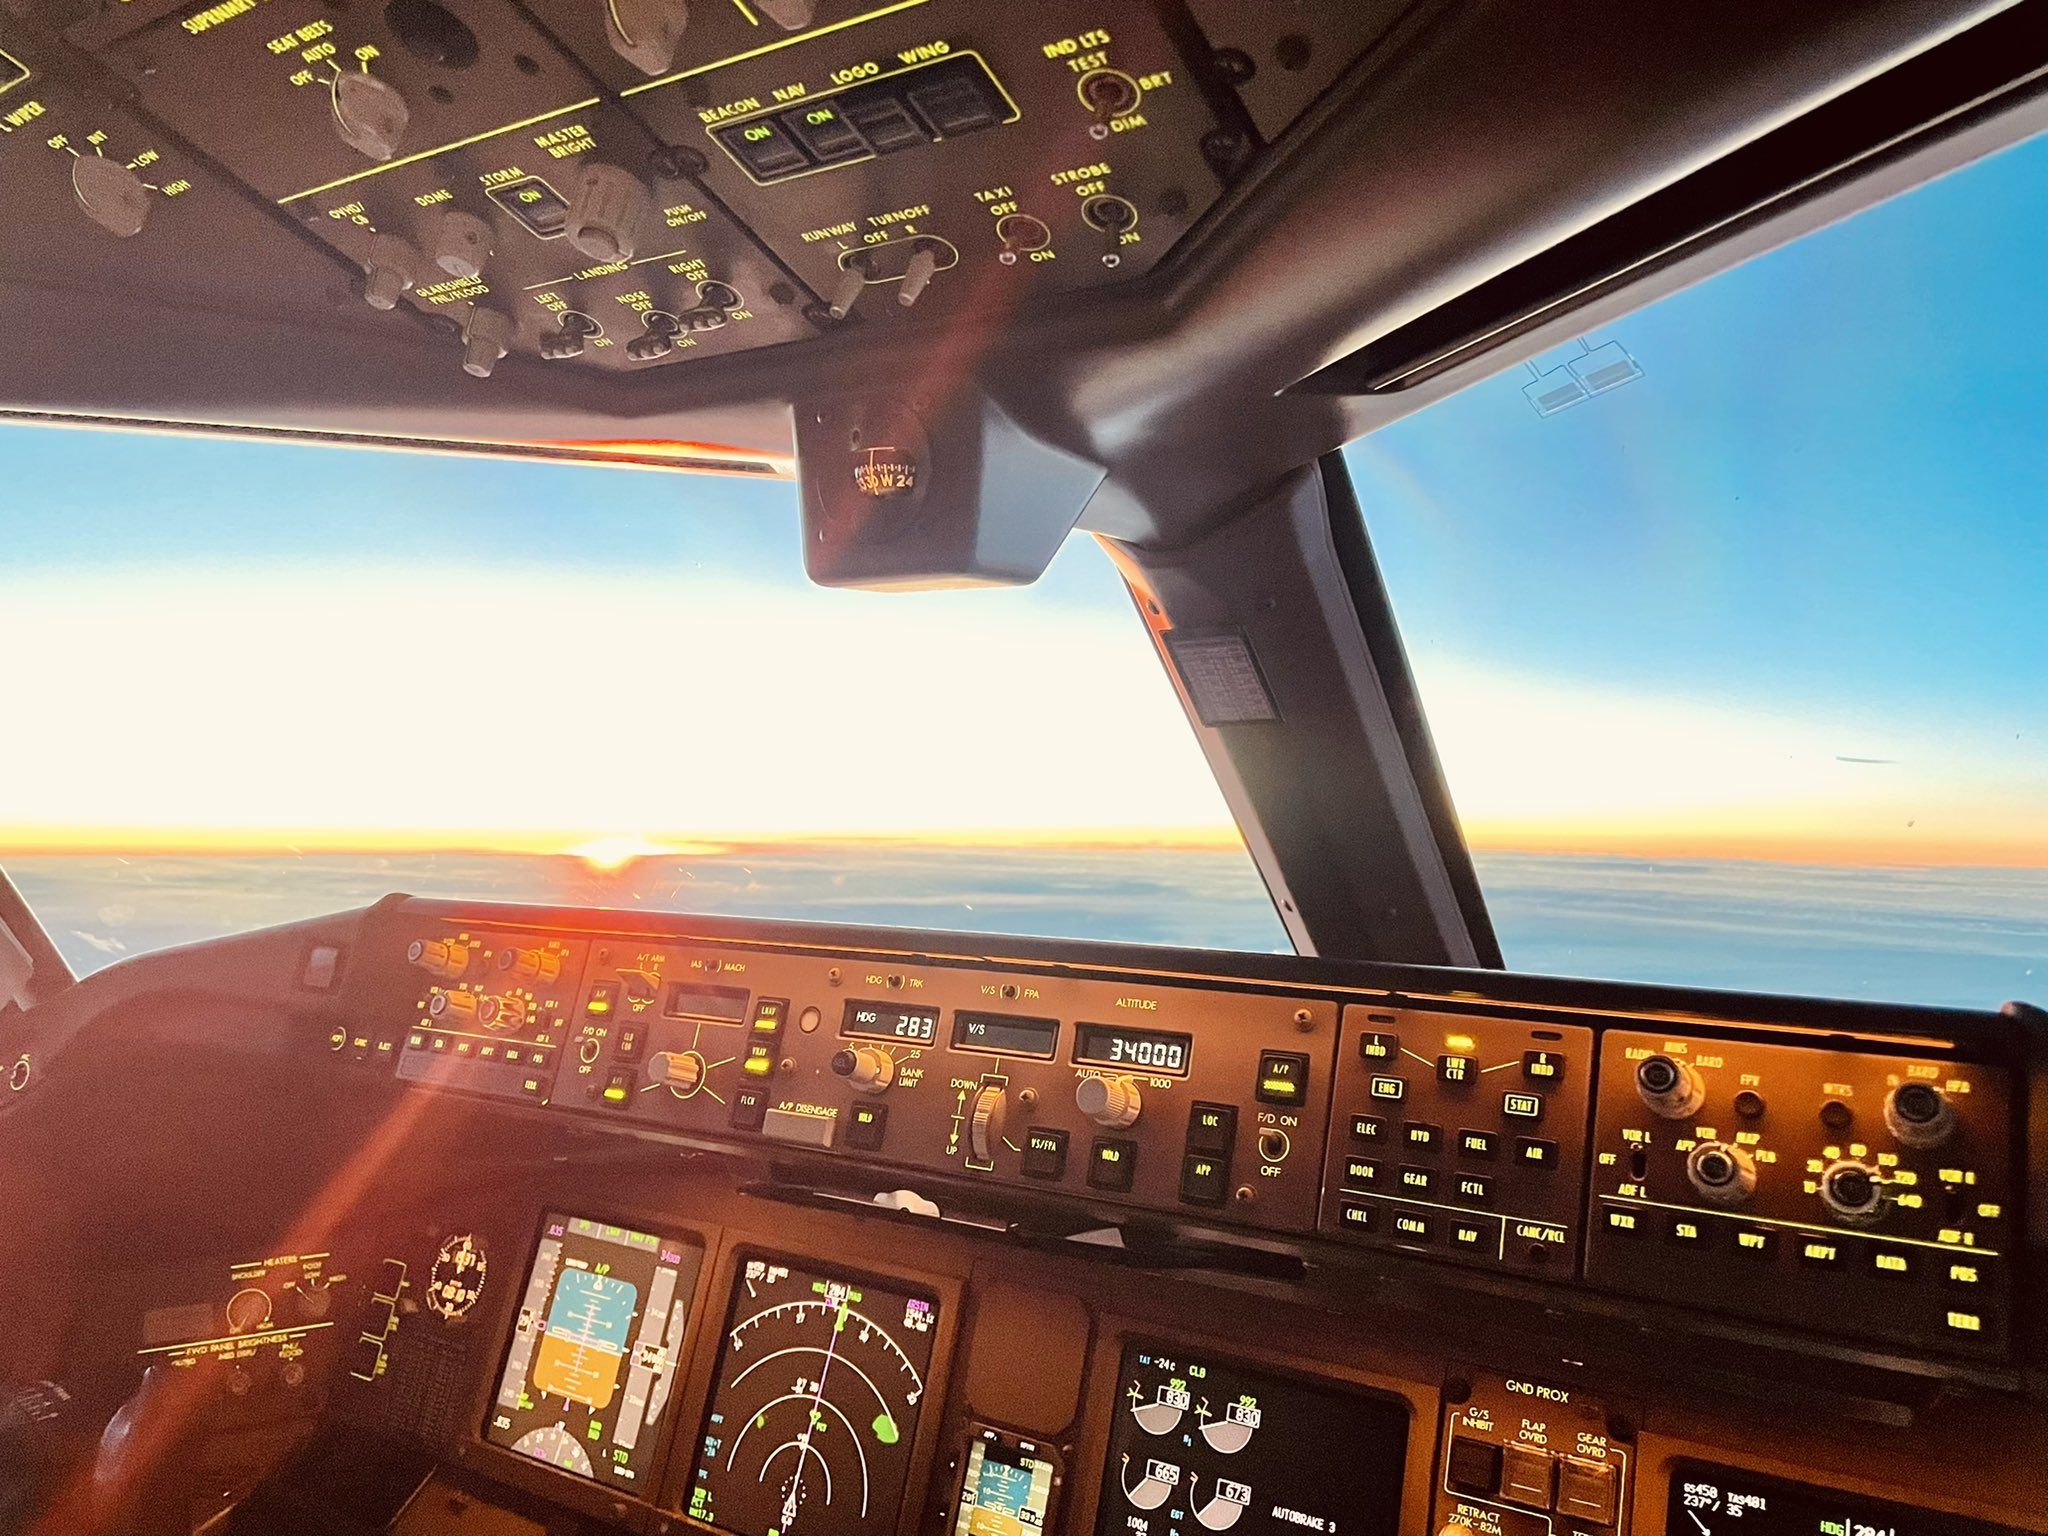  Boeing Hintergrundbild 2048x1536. Airbus Pilot on X: When the sun kisses my office! #pilot #airbus #boeing #sunset #AvGeek #emirates / X